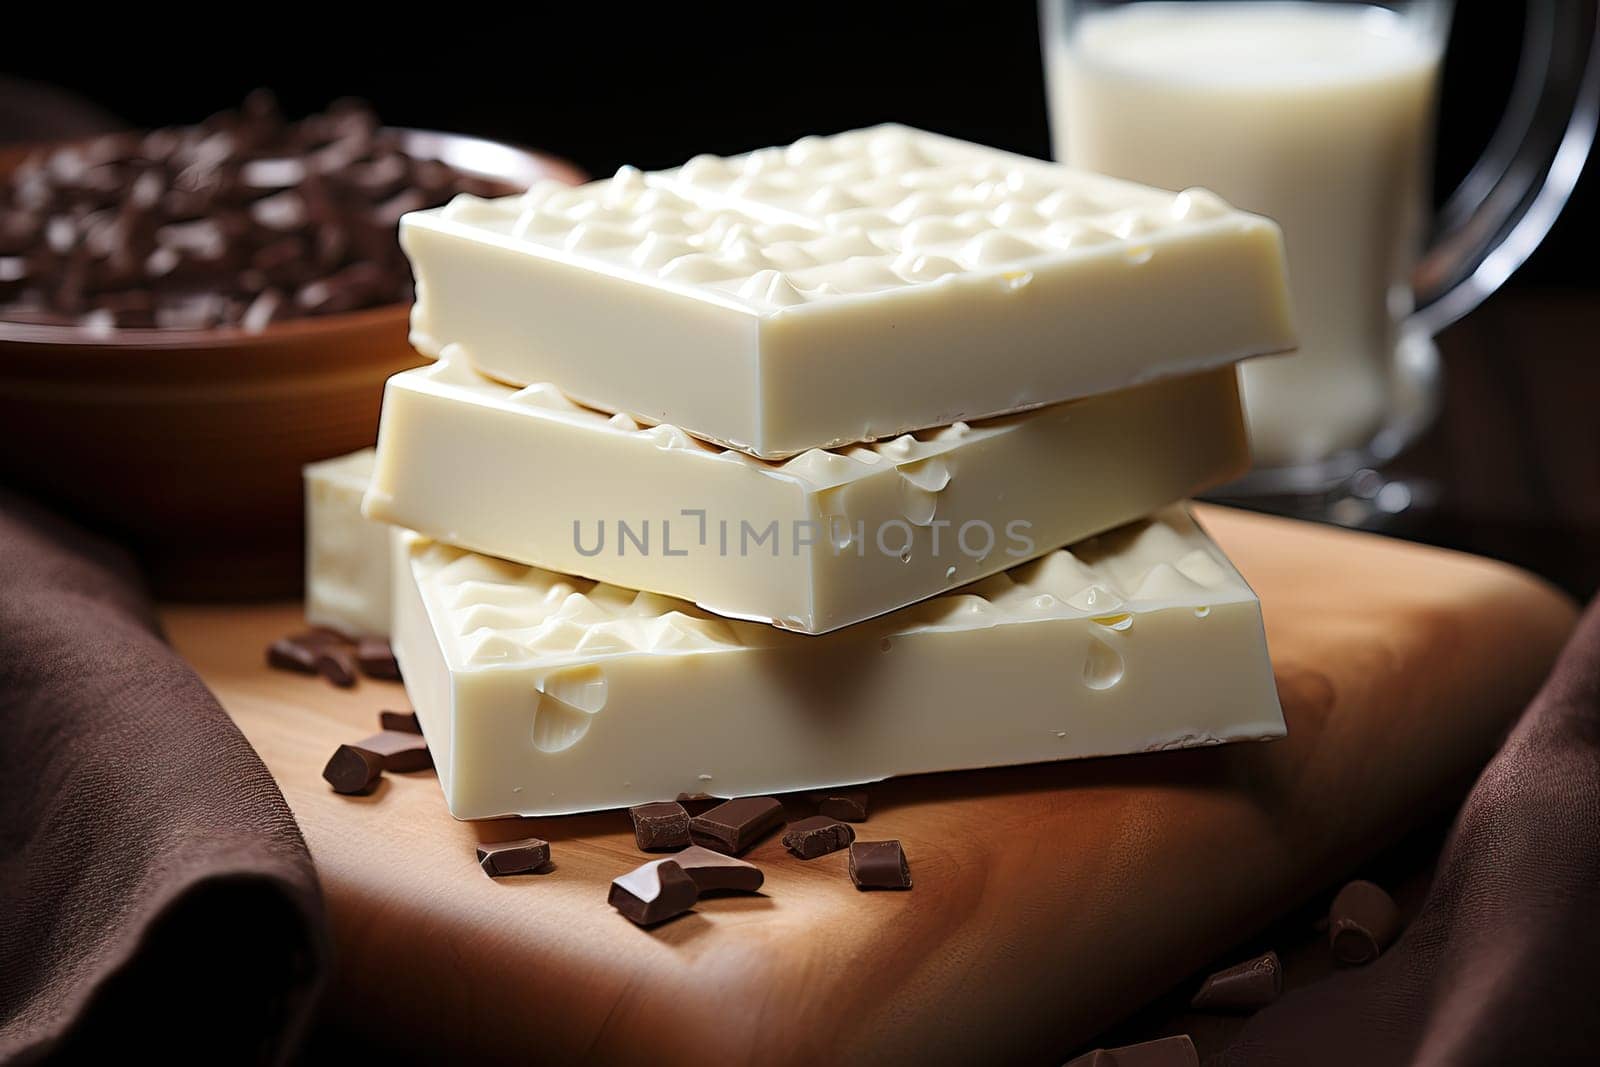 Bars of dark and white chocolate together by Niko_Cingaryuk